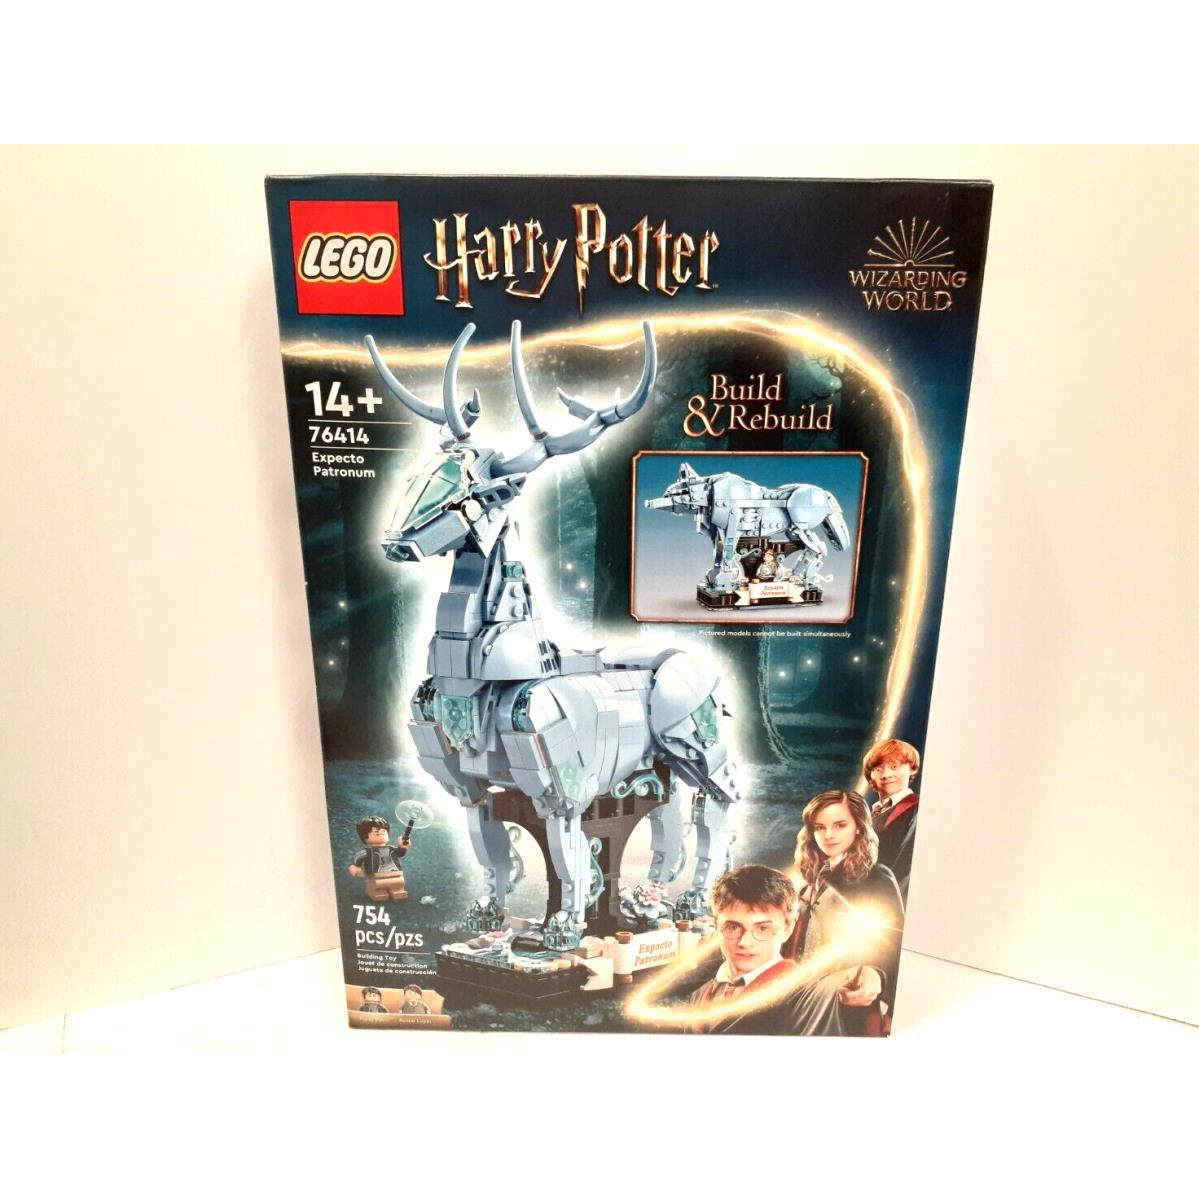 Lego Harry Potter Wizarding World 76414 Expecto Patronum